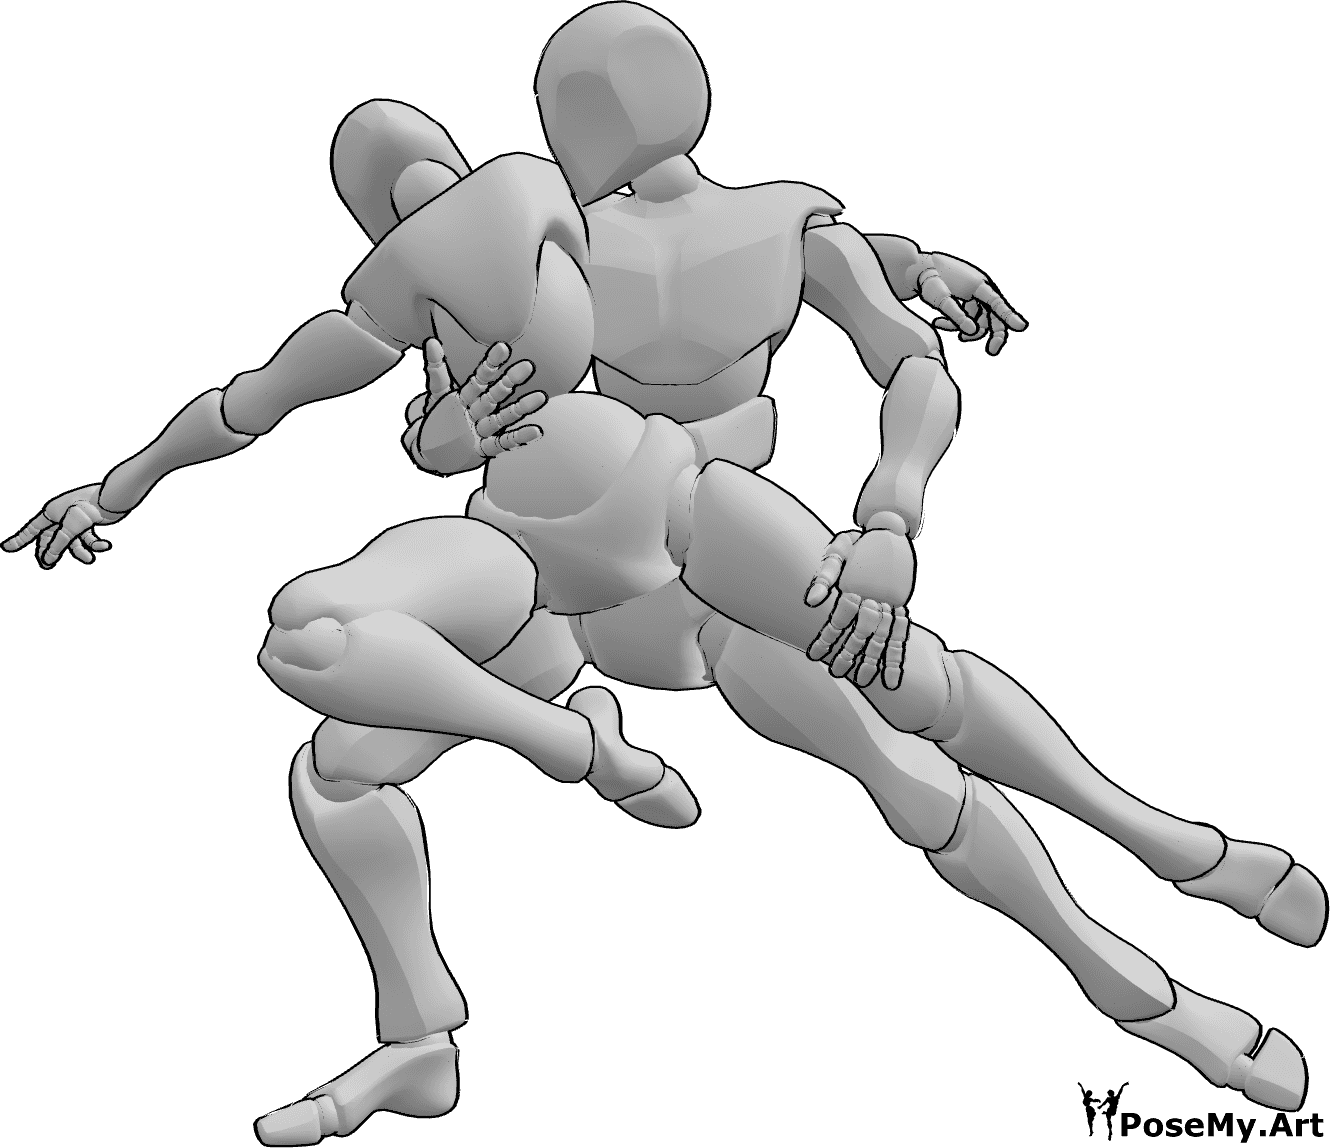 Pose Reference- Dynamic tango dance pose - Male tango dancer is holding the female dancer, dynamic tango pose